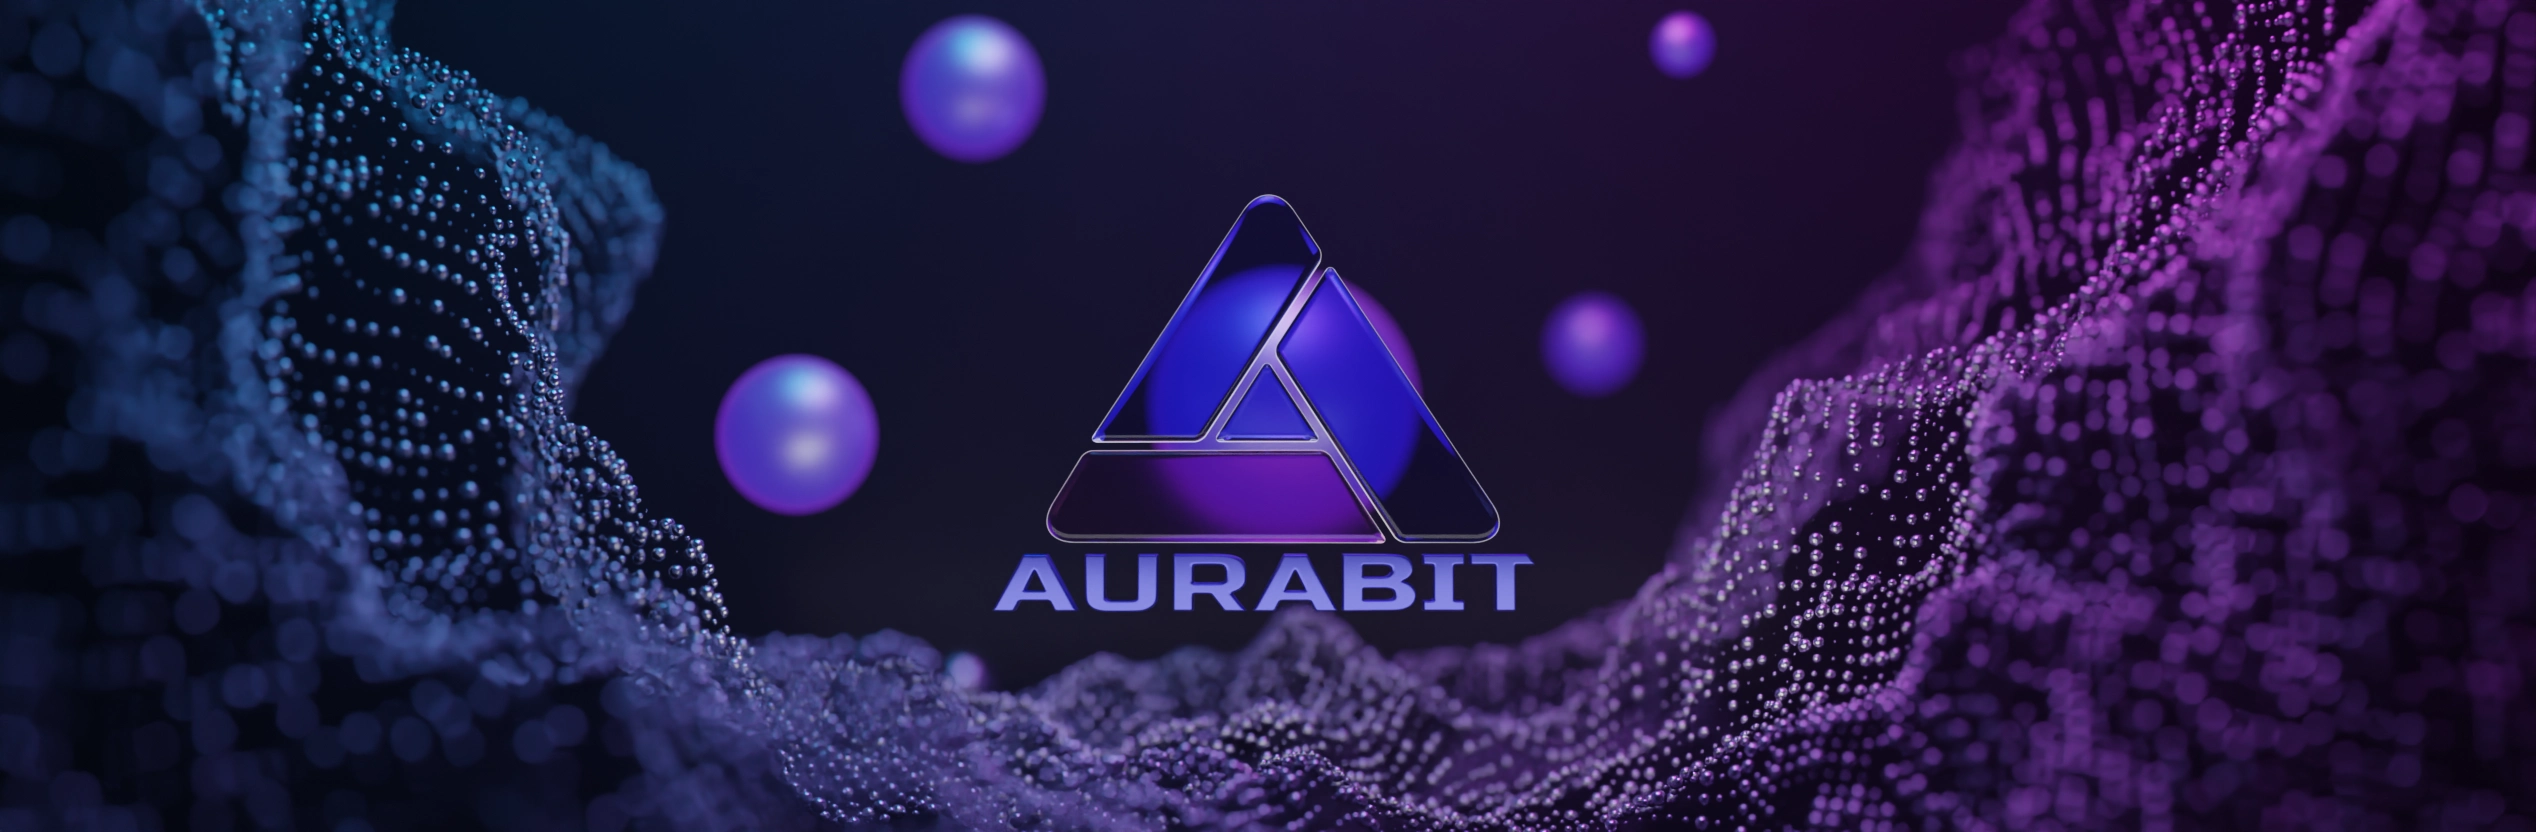 Aurabit Website Privacy Policy